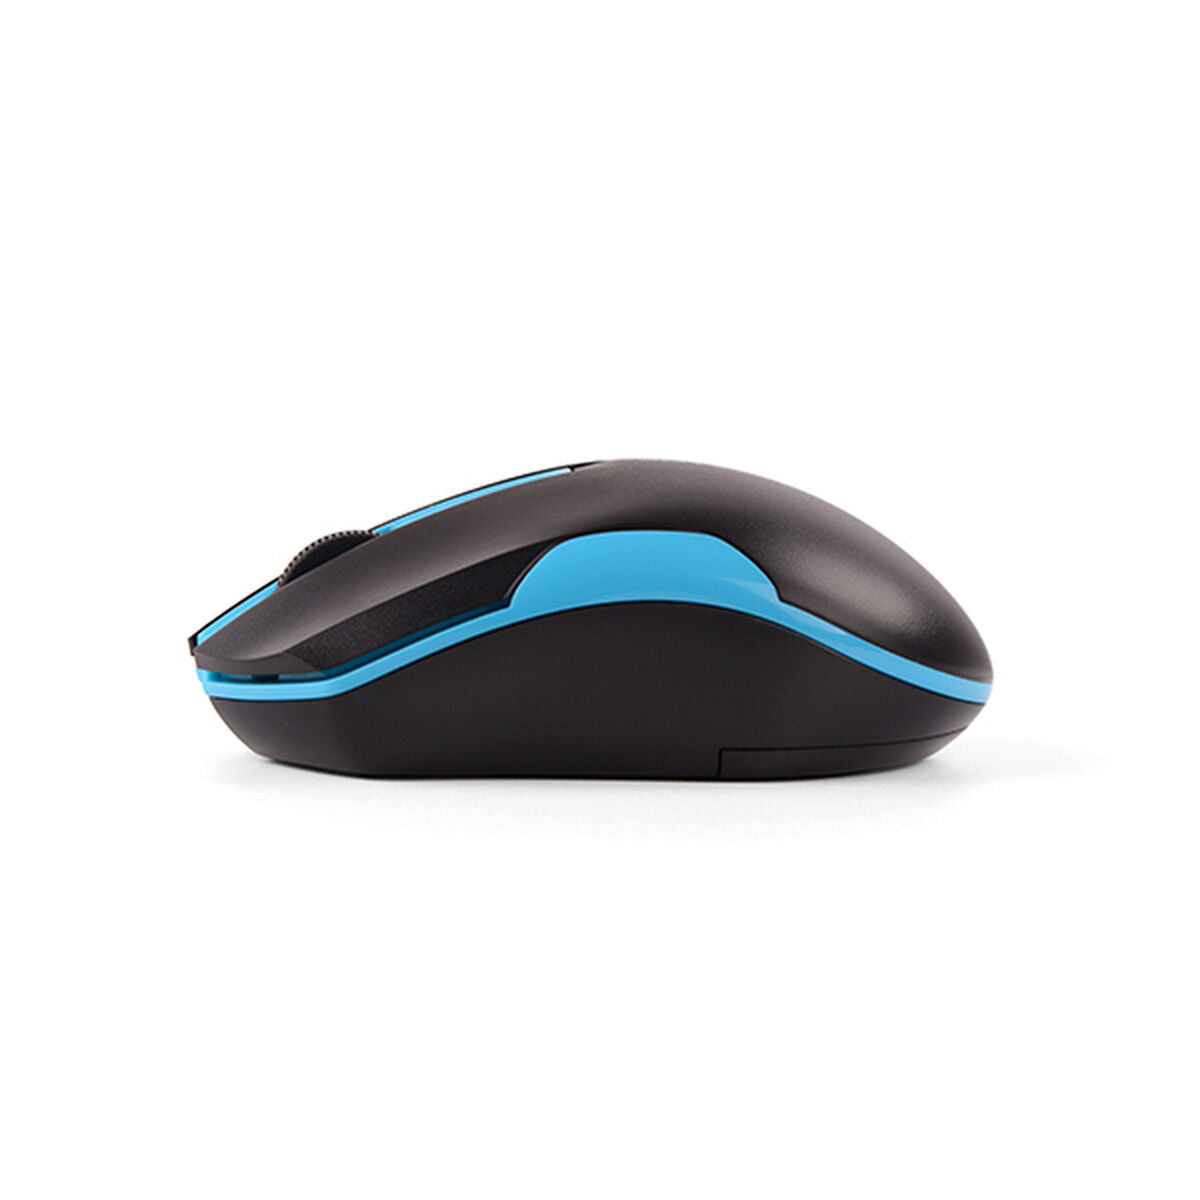 Schnurlose Mouse A4 Tech G3-200N Schwarz/Blau 1000 dpi - CA International  